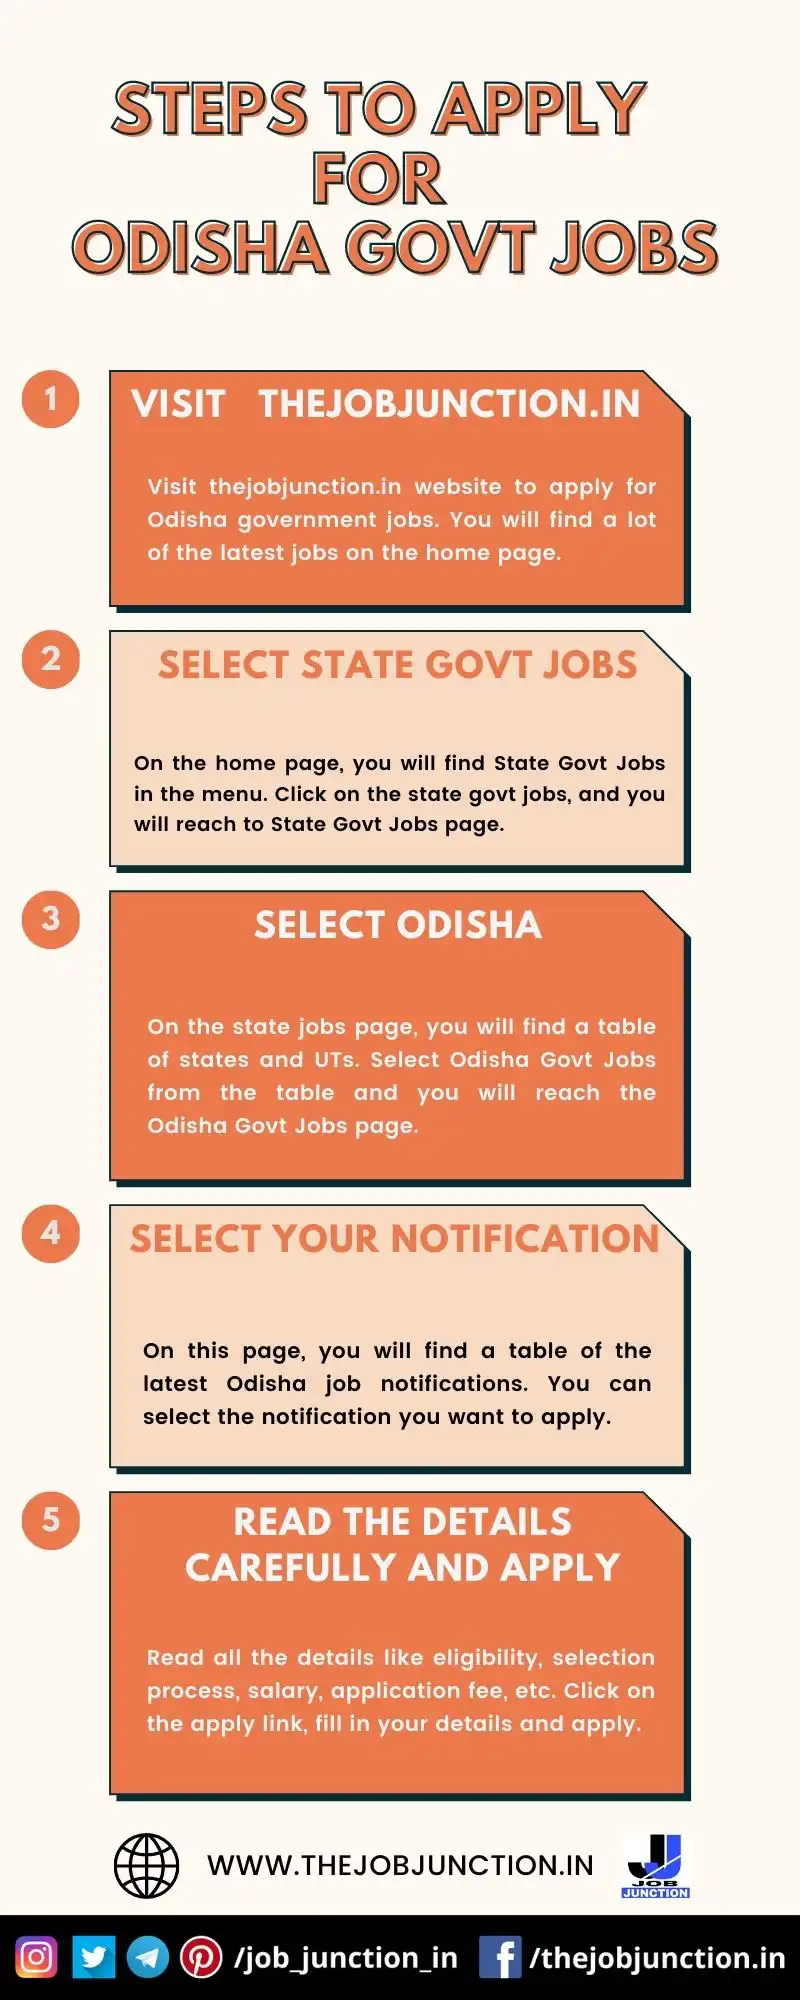 STEPS TO APPLY FOR ODISHA GOVT JOBS